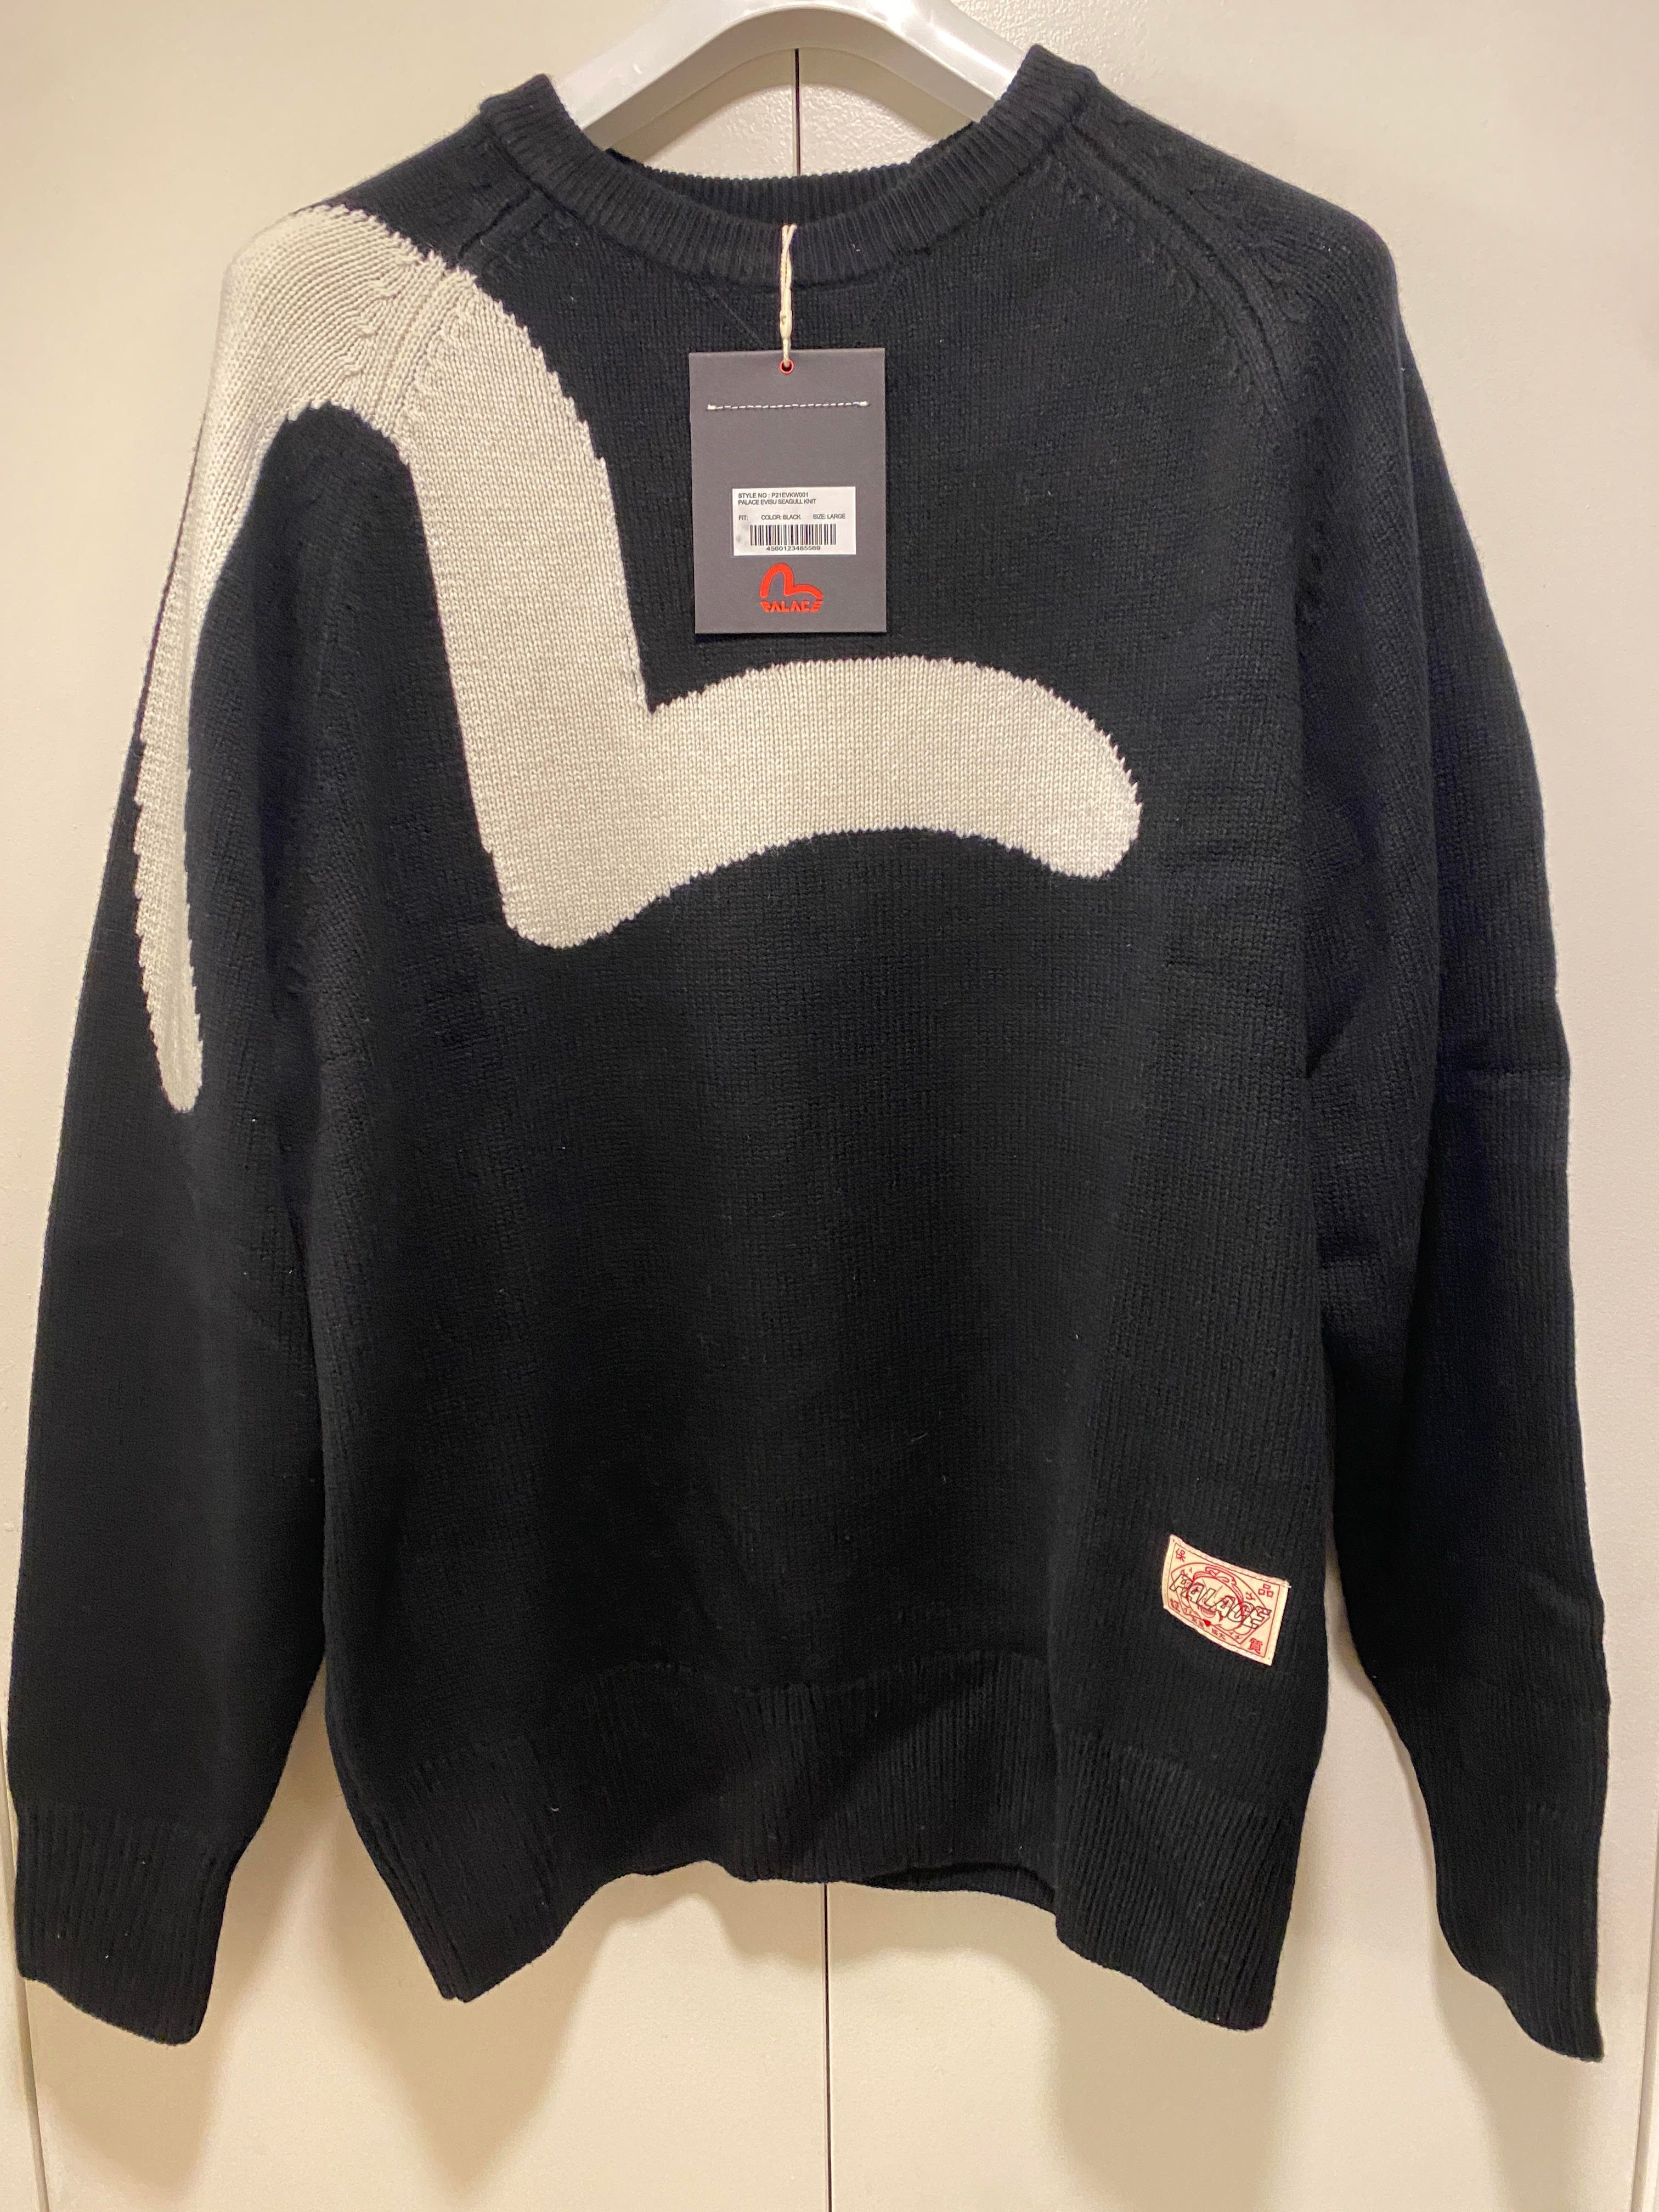 Palace Palace Evisu Seagull knit Black Sweater size Large Size US L / EU 52-54 / 3 - 1 Preview